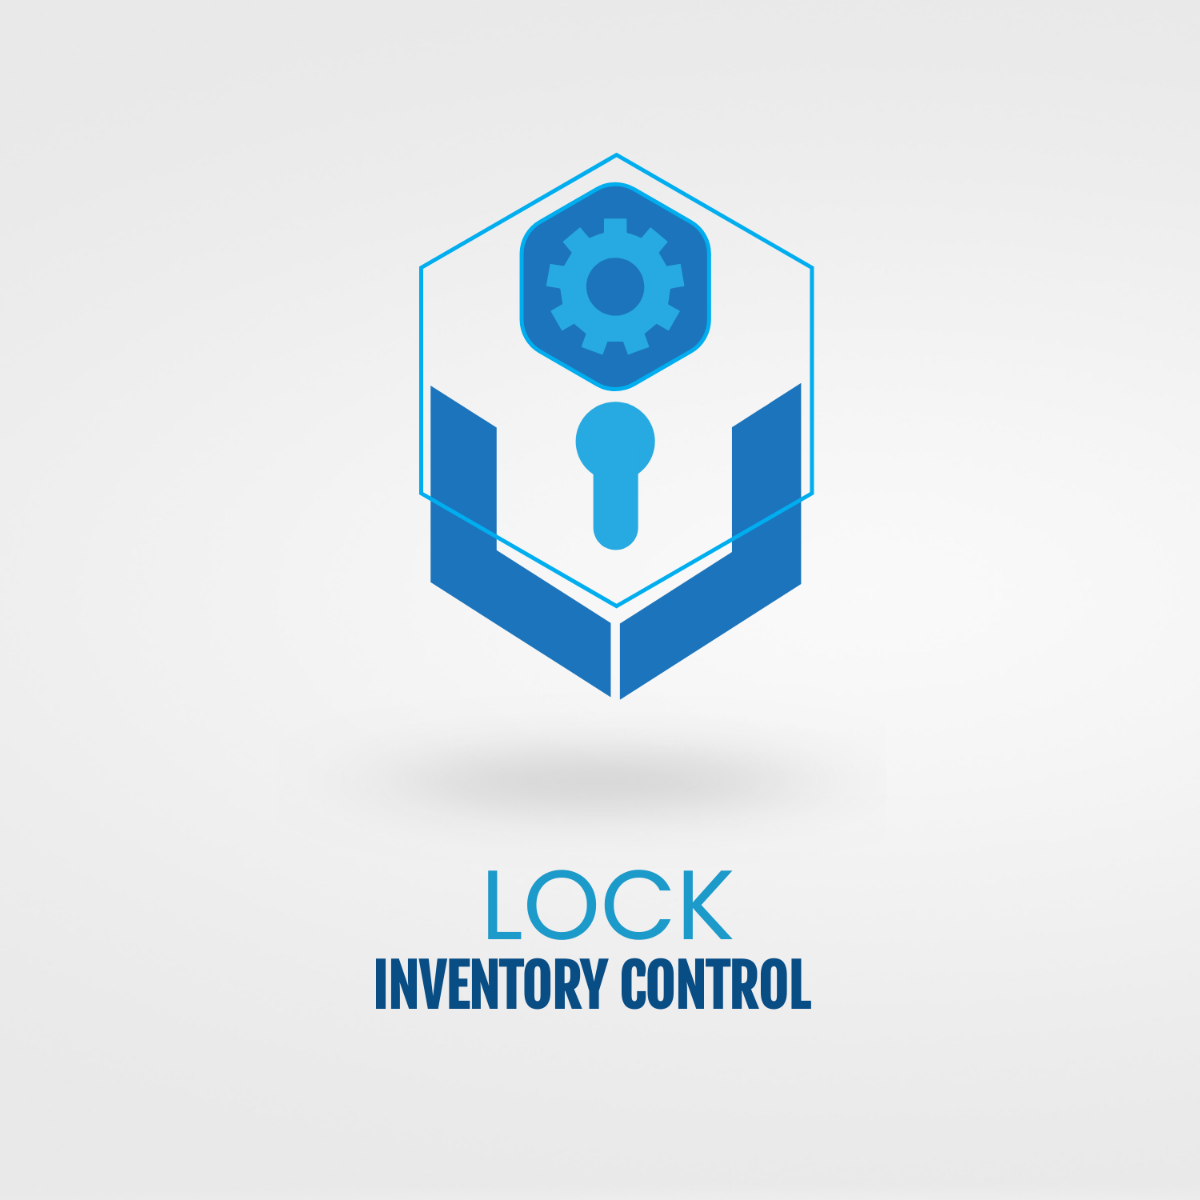 Inventory Control Lock Logo Template